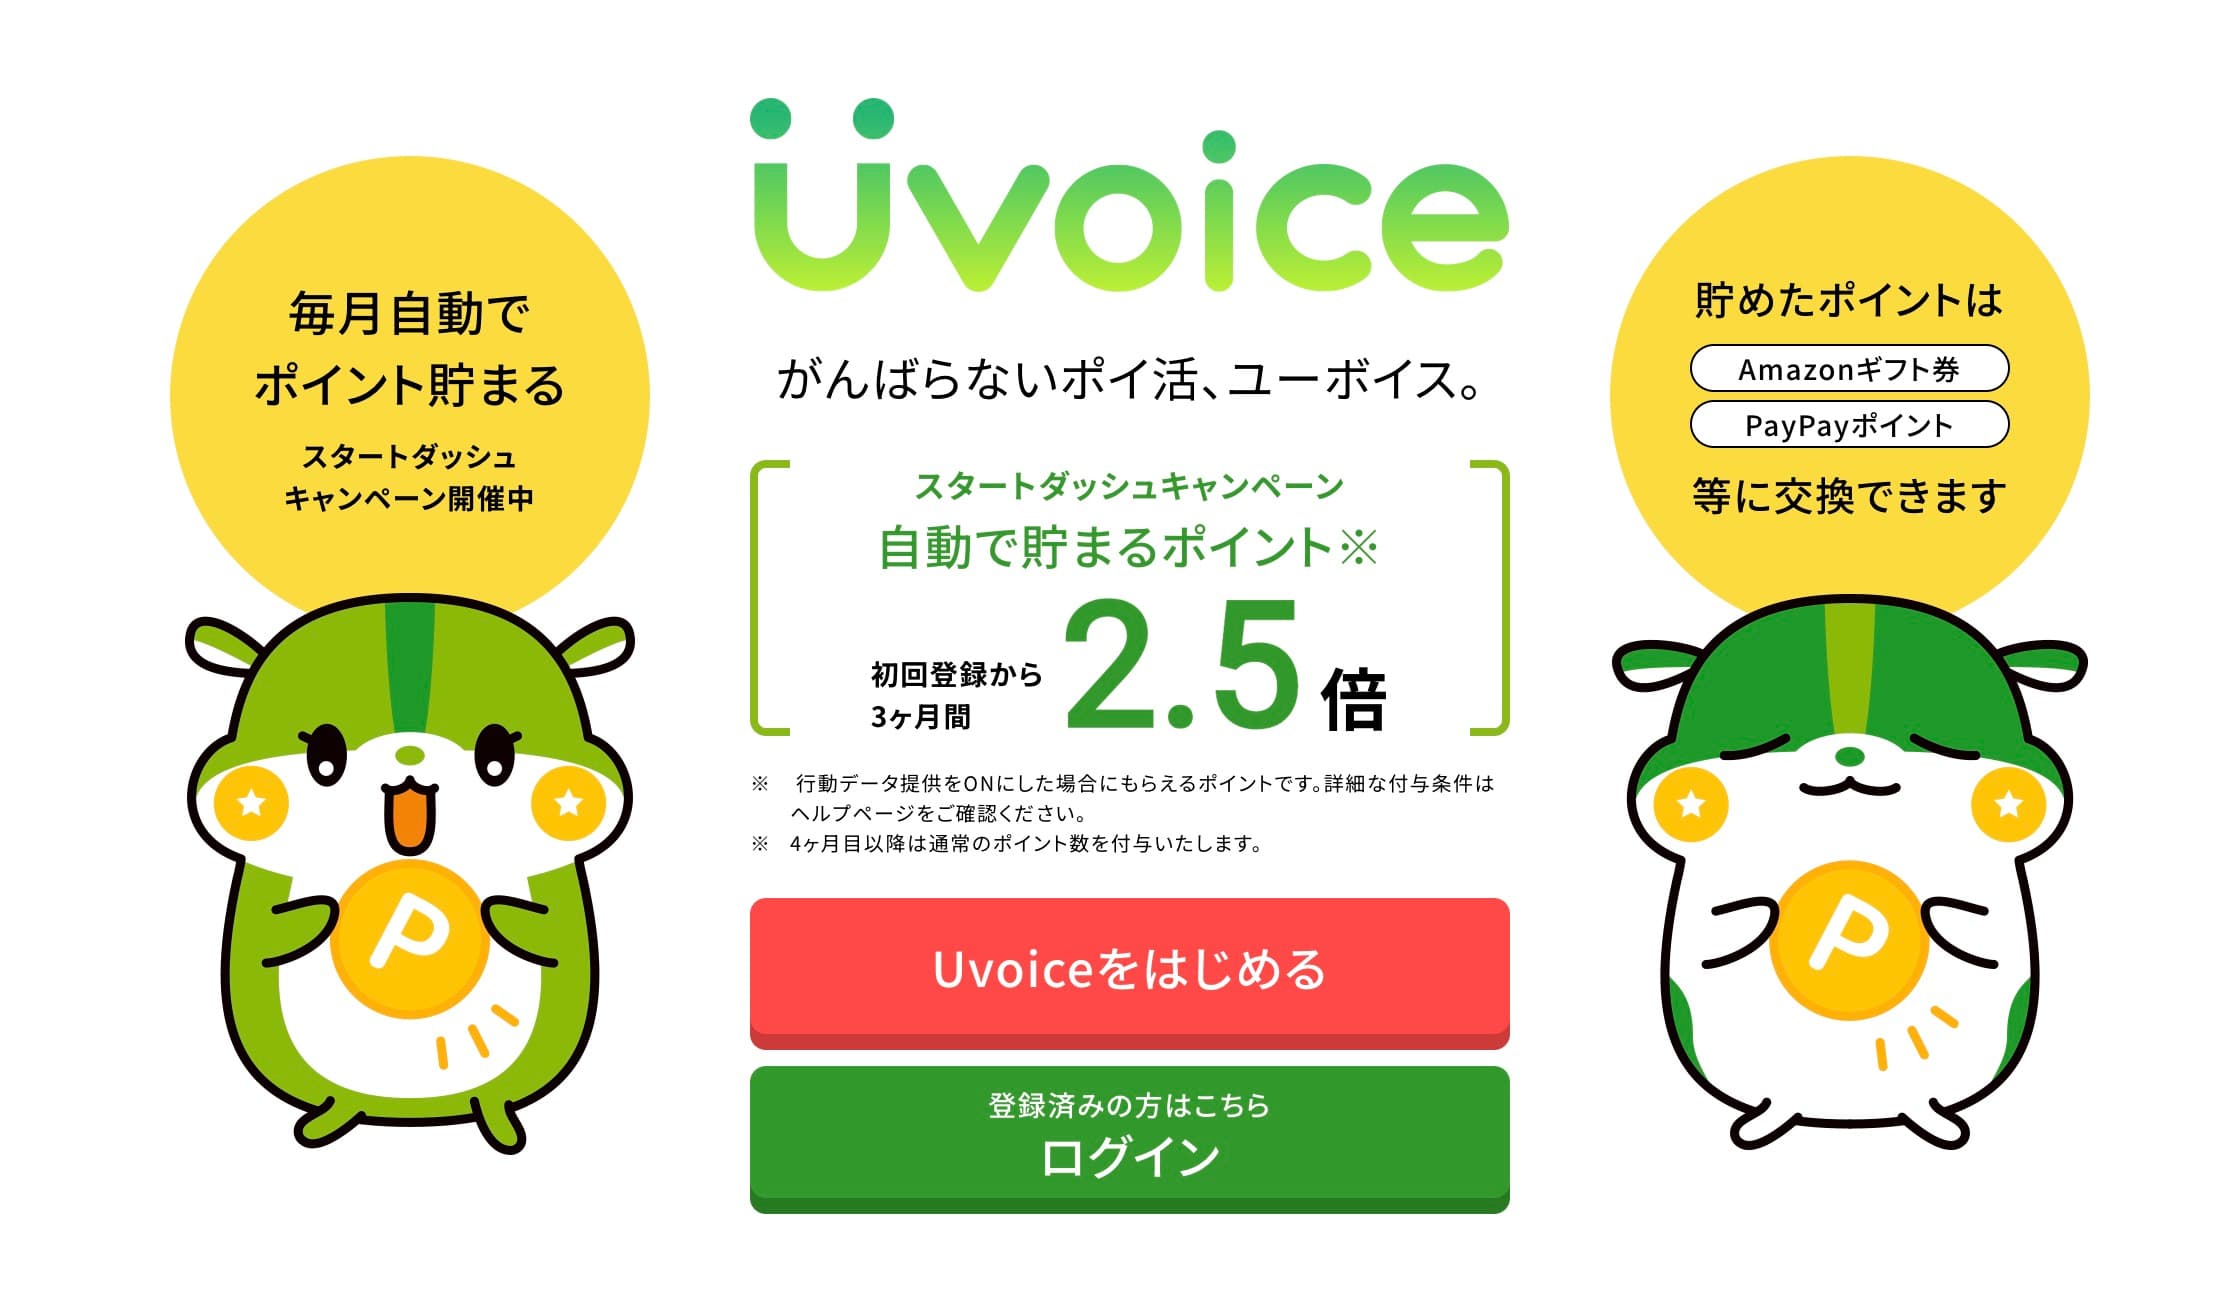 Uvoice（ユーボイス）